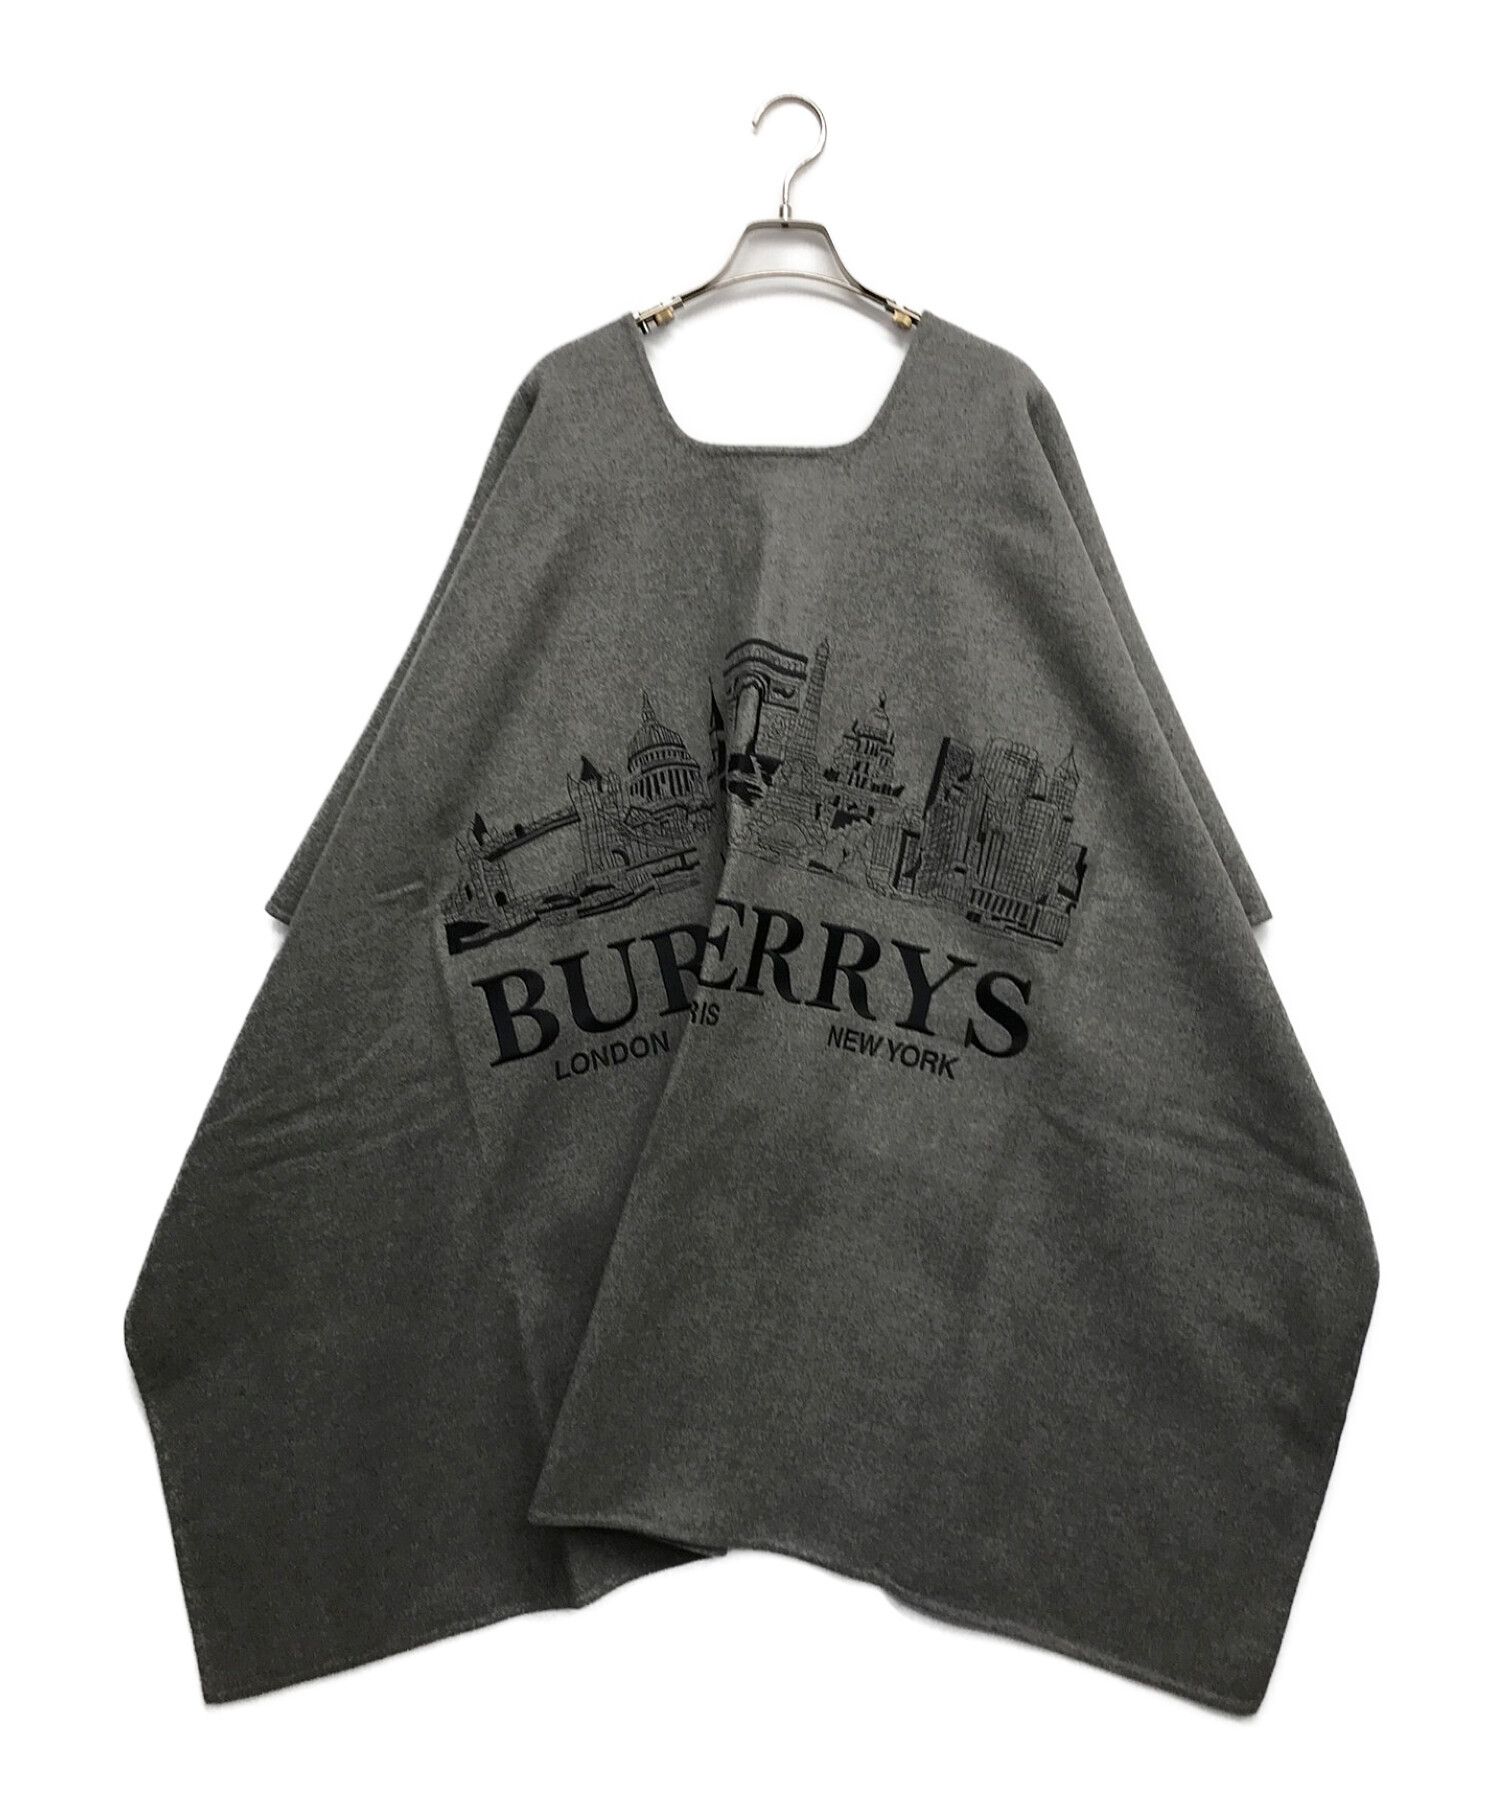 BURBERRY (バーバリー) カシミヤバックロゴポンチョ グレー サイズ:XS/S